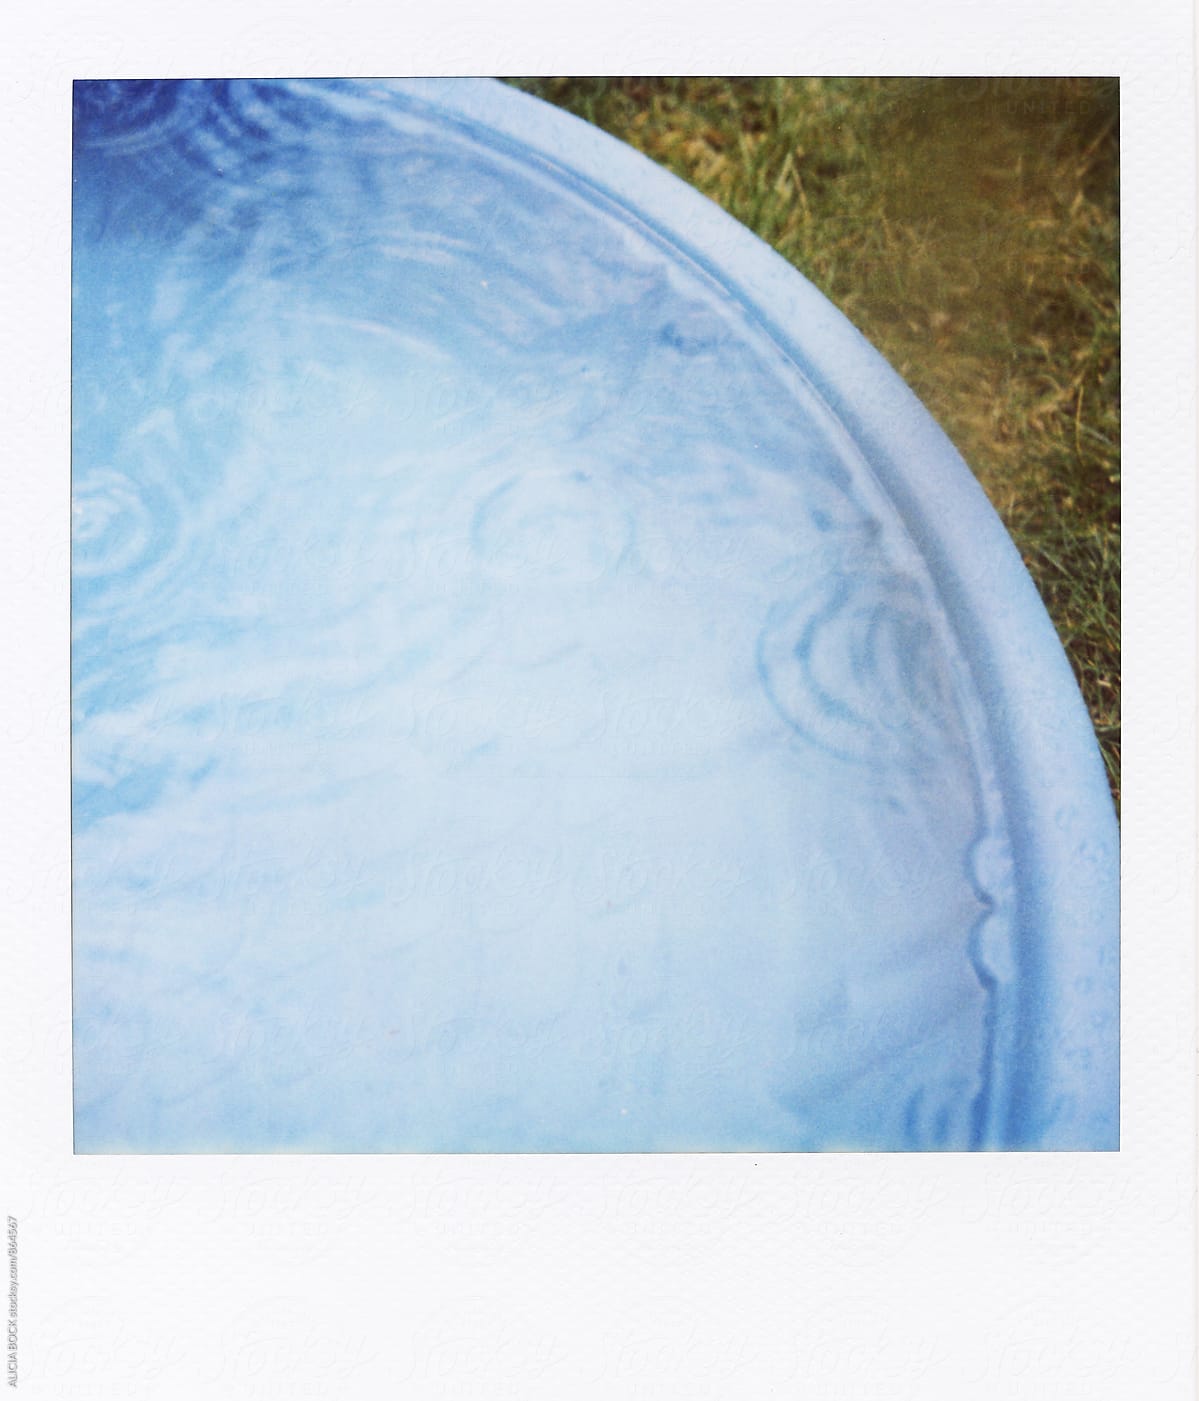 Polaroid Photograph of Small Kiddie Pool In The Rain